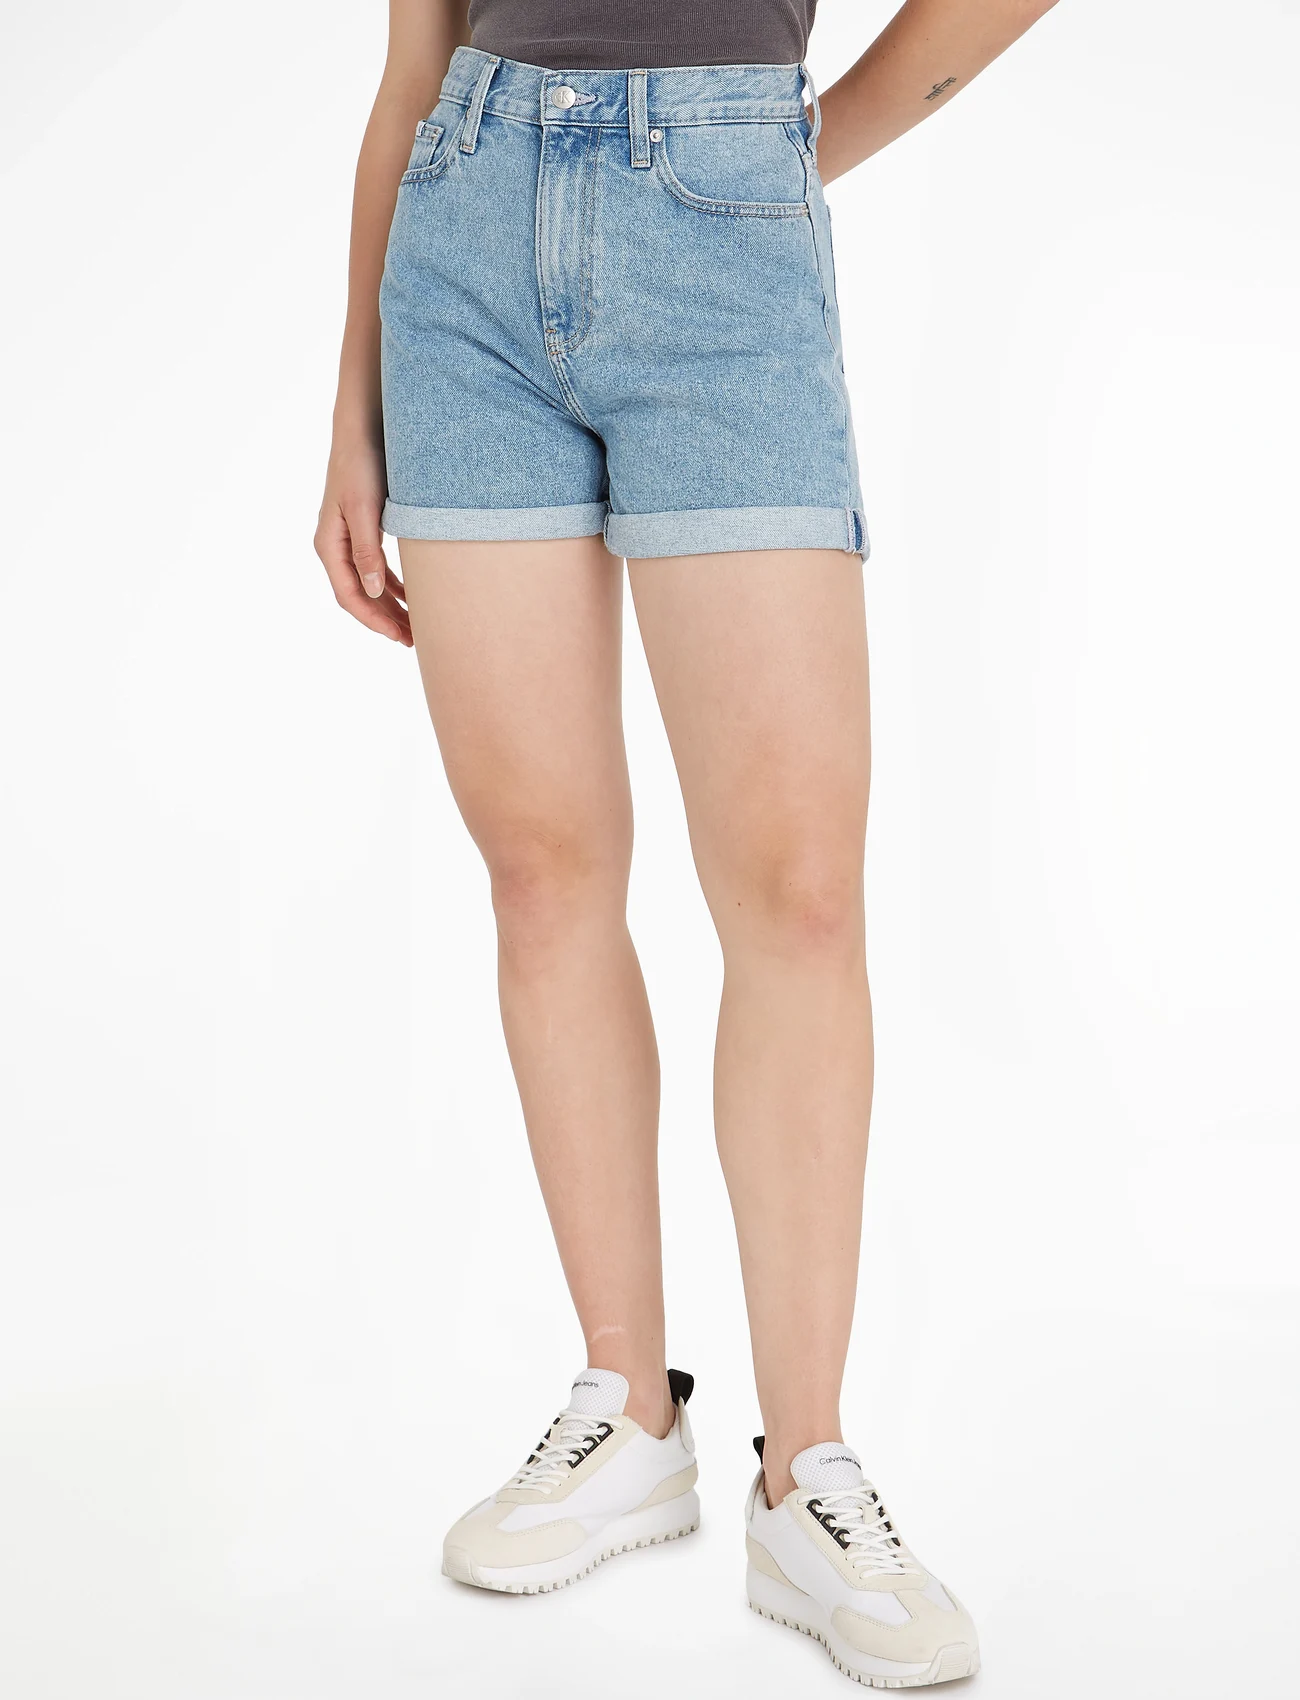 Calvin Klein Jeans - MOM SHORT - denimshorts - denim medium - 0